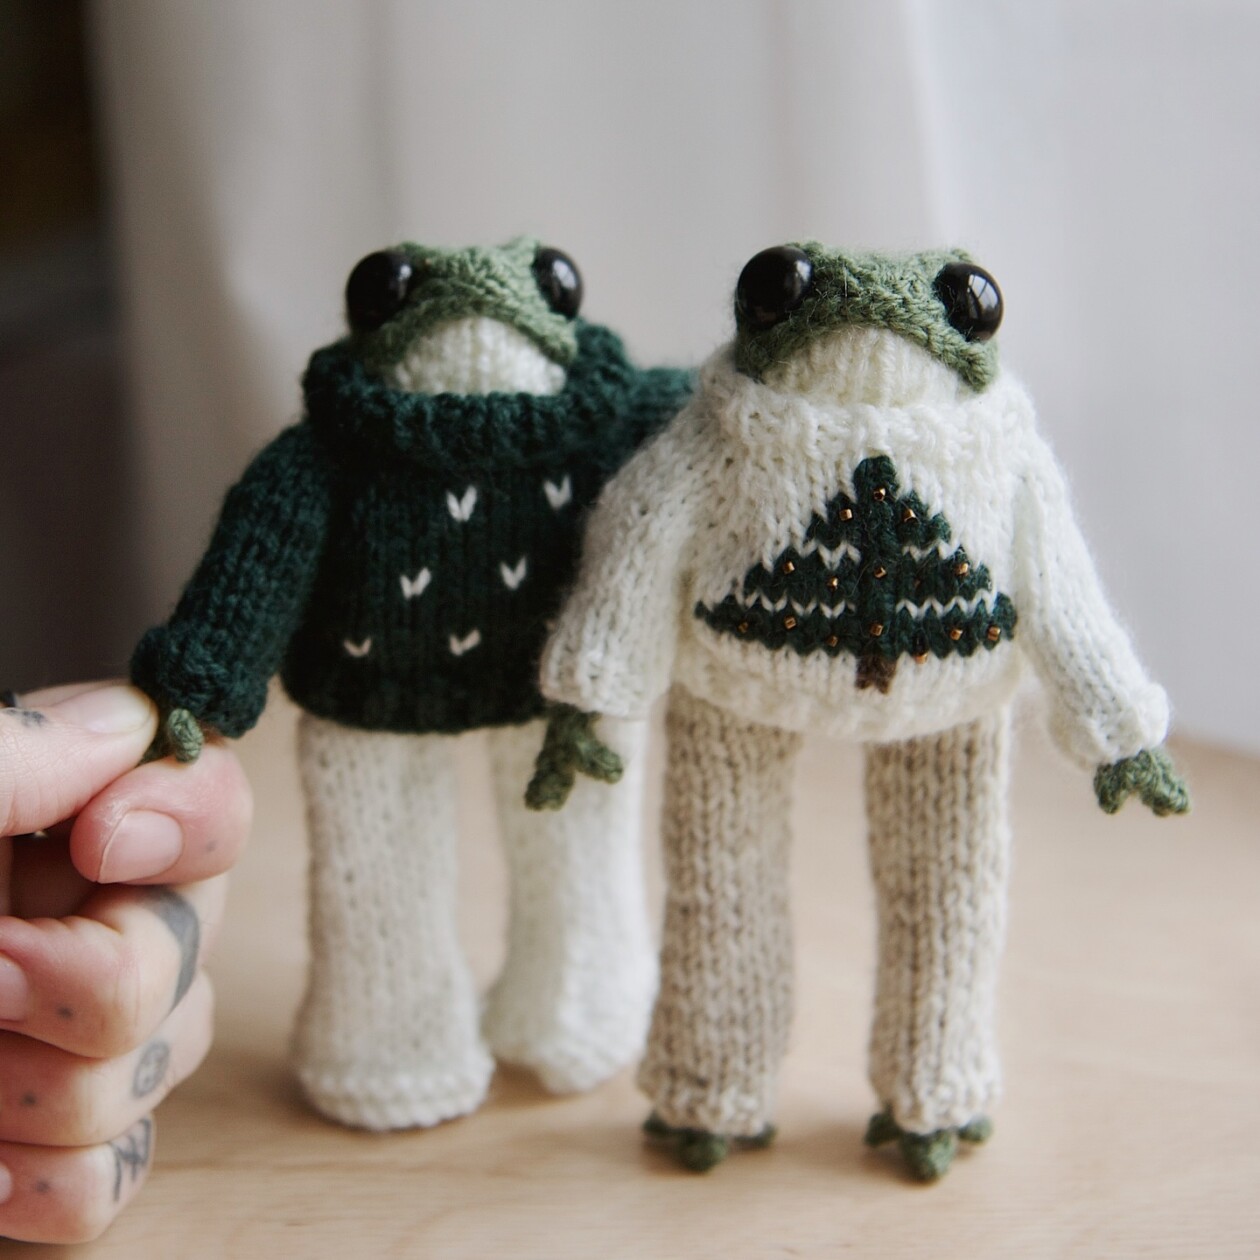 Enchanting Anthropomorphized Frog Crochet Patterns By Elliot (12)